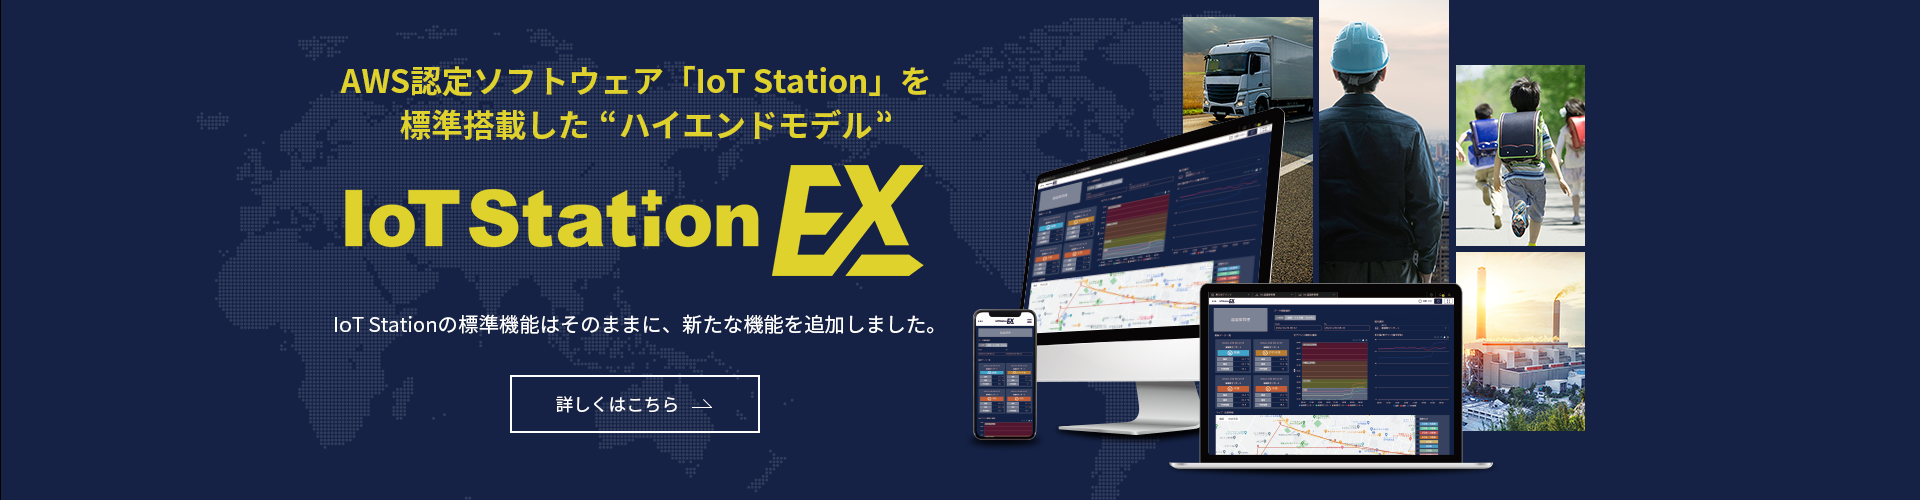 IoT Station EX